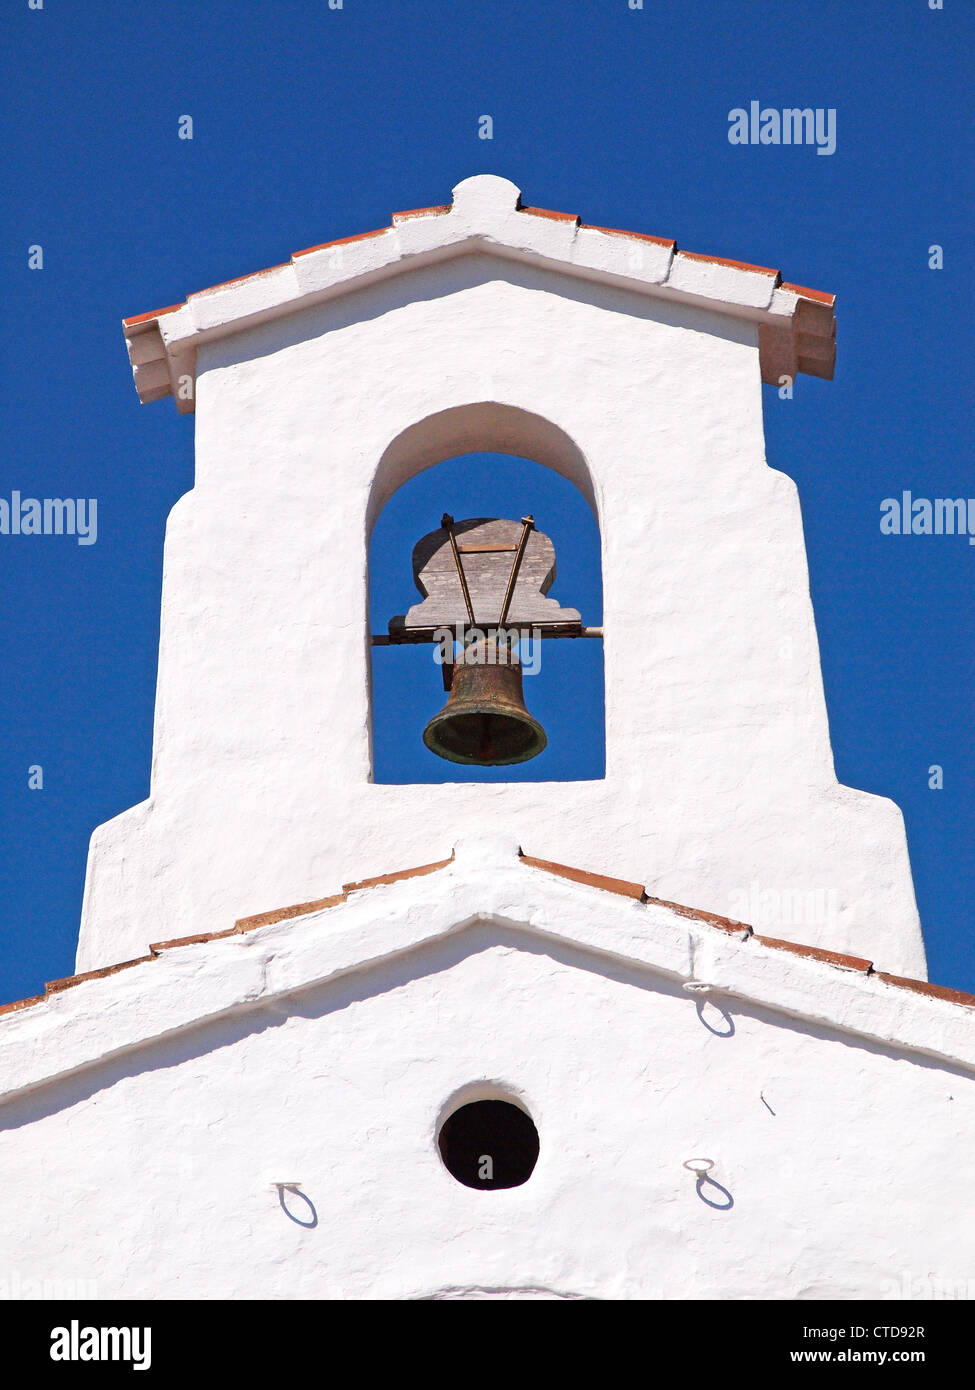 17TH c BELL TOWER OF SANCTUARY OF THE MARE de DEU DEL TORO MOUNT TORO MENORCA Stock Photo